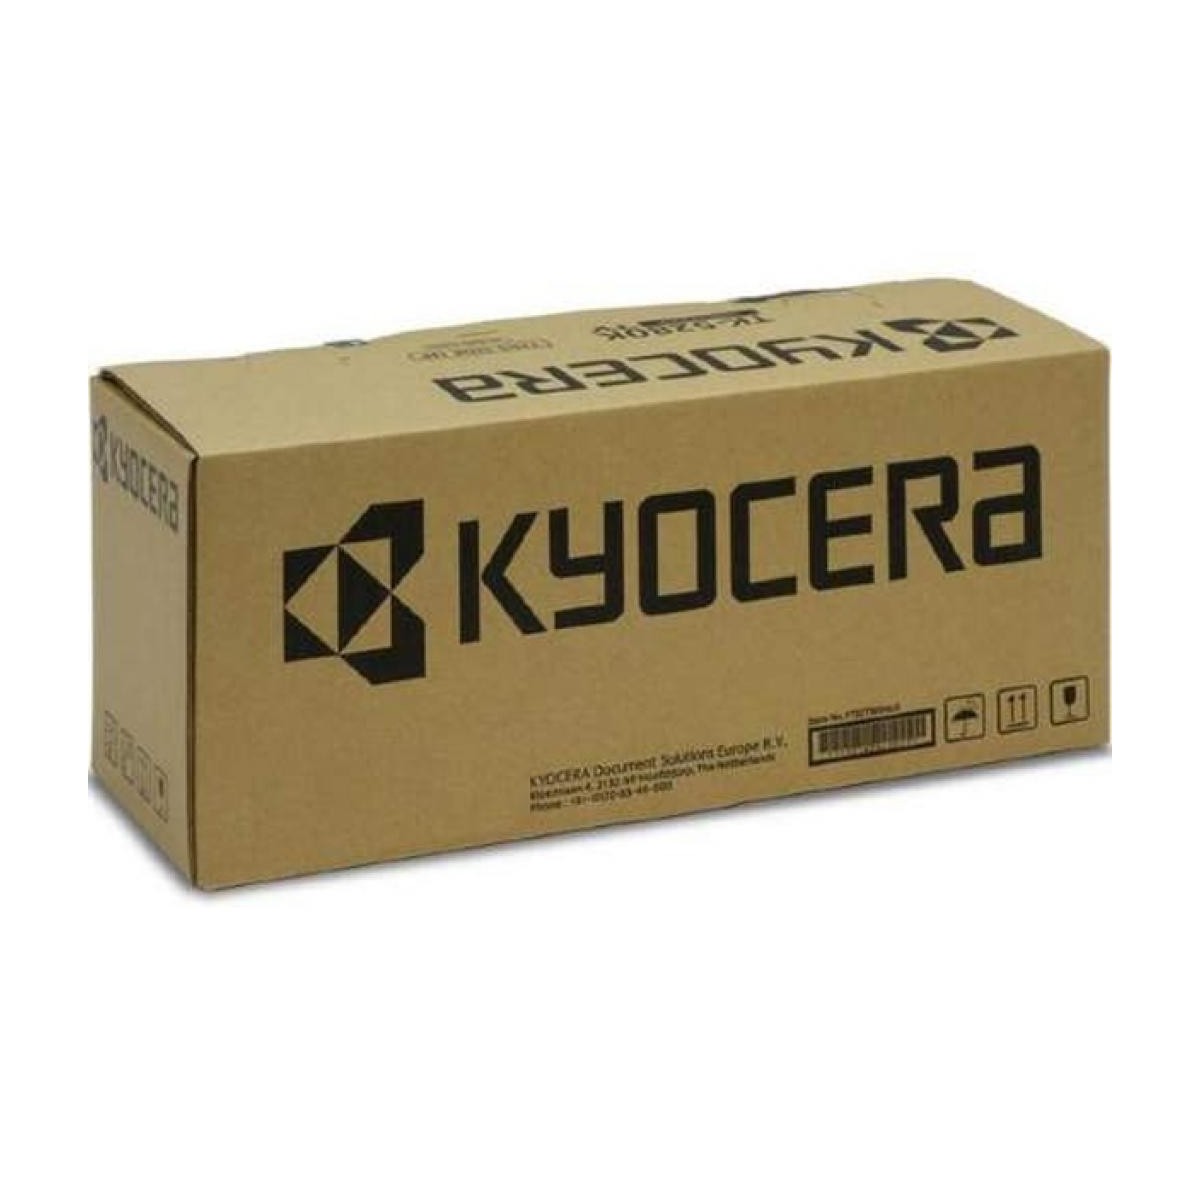 Kyocera Maintenance Kit MK-6725 1702NJ8NL0 schwarz